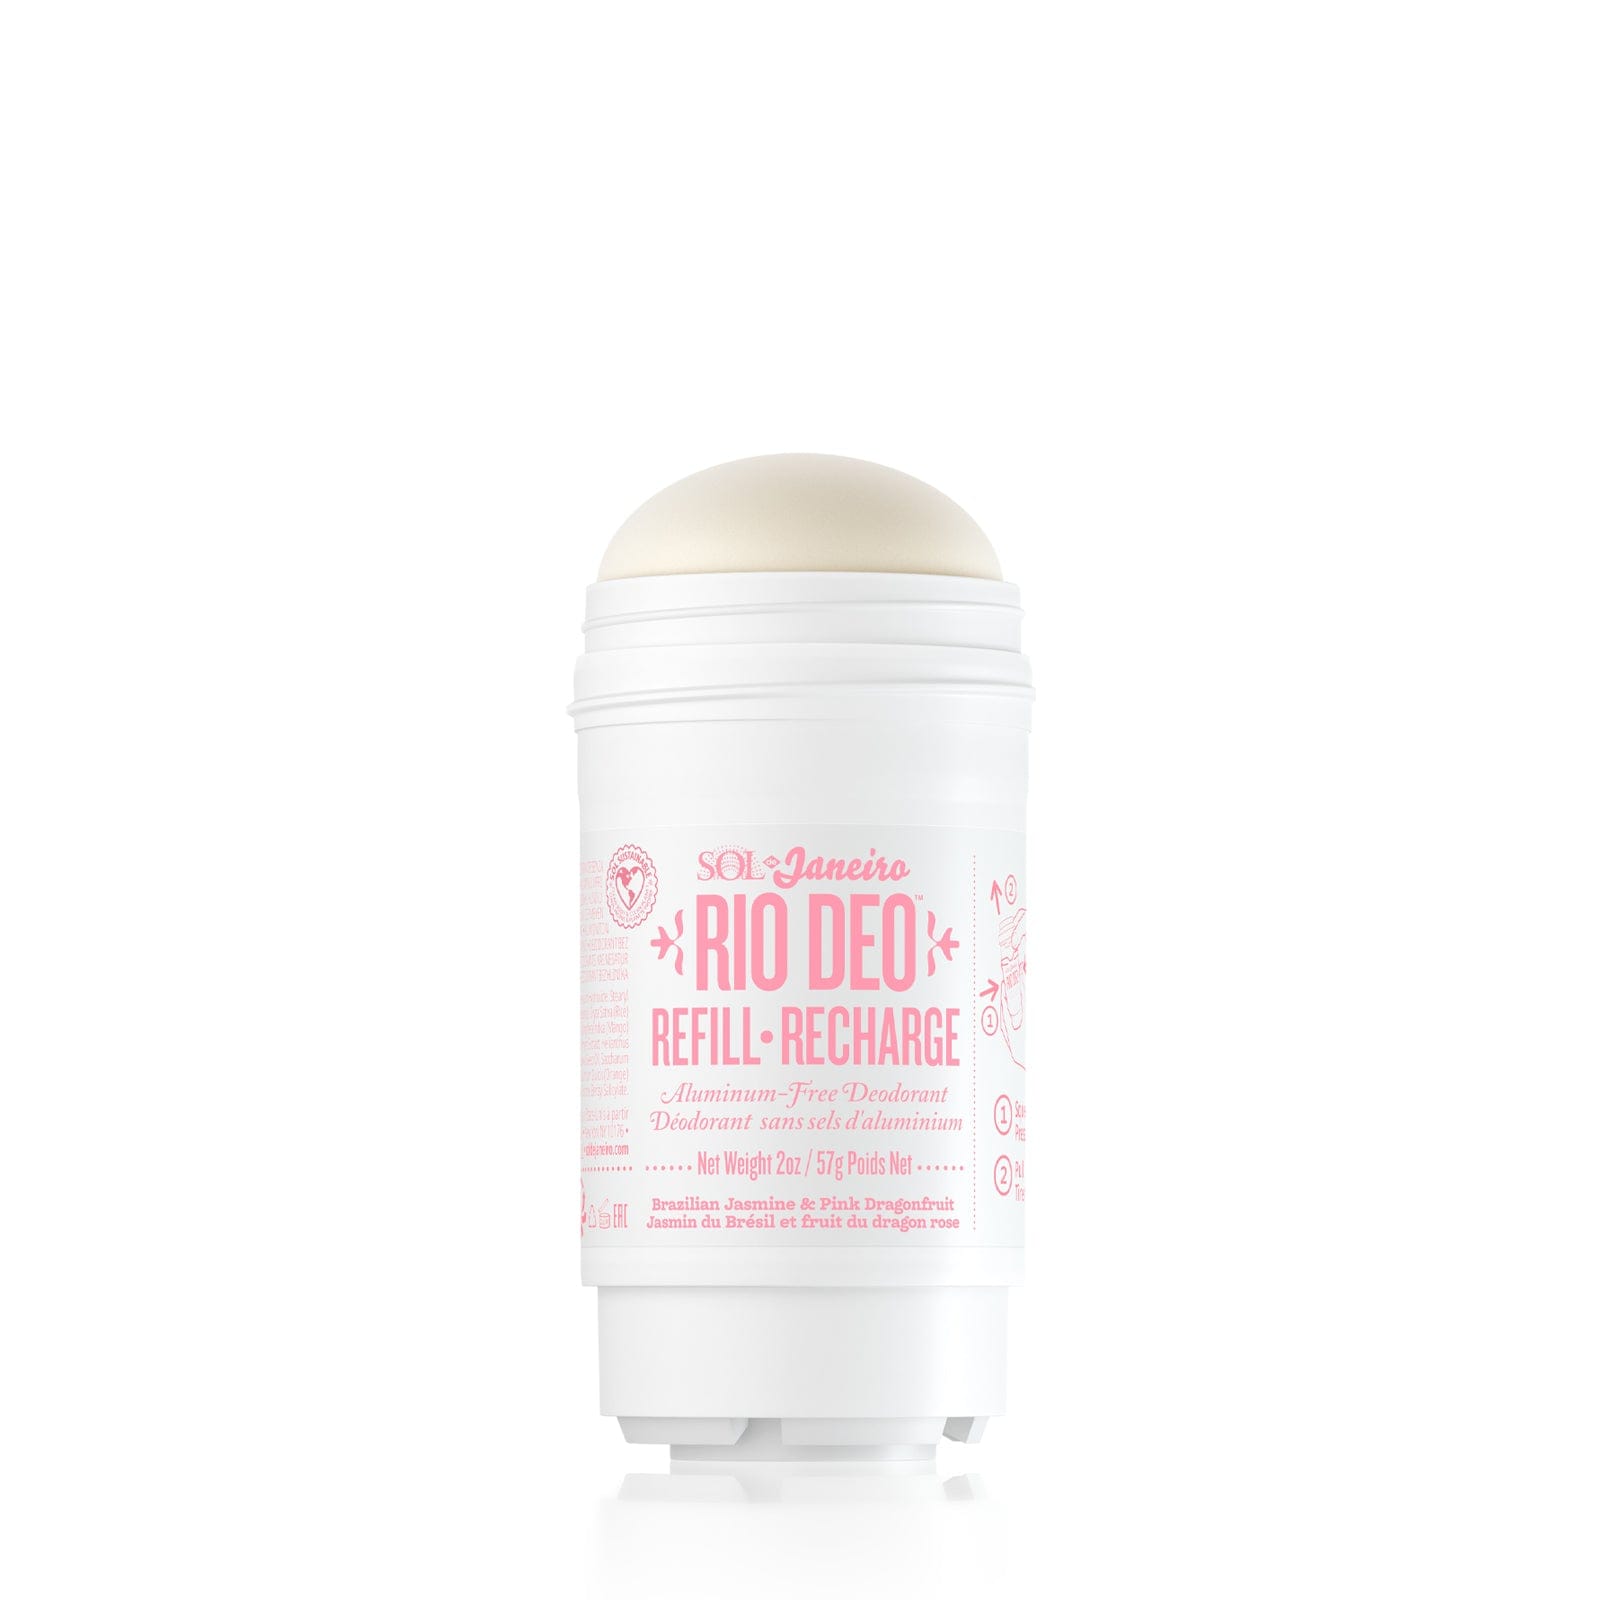 Rio Deo Aluminum-Free Deodorant Cheirosa 68